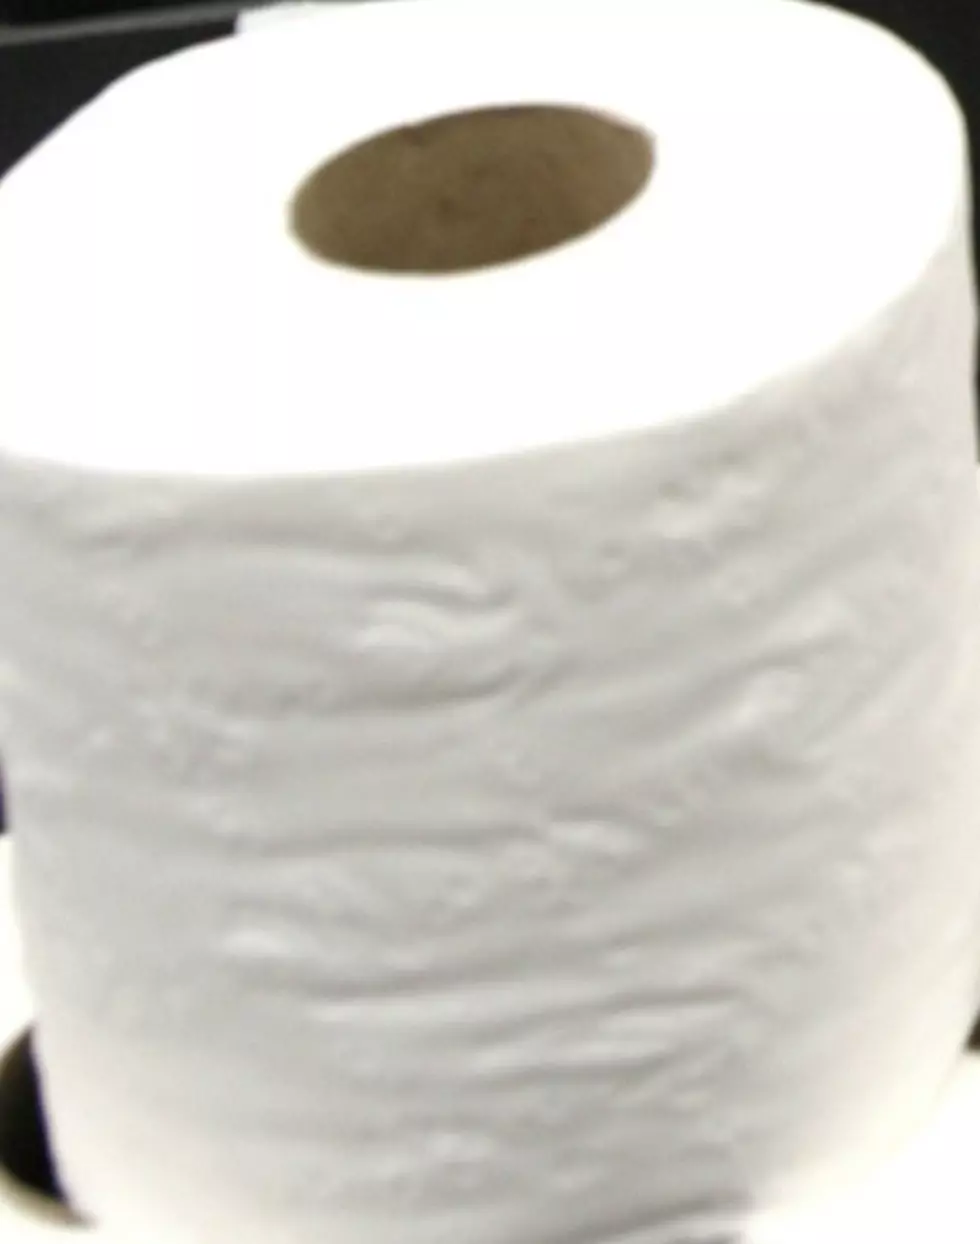 Toilet Paper or Paper Towel?